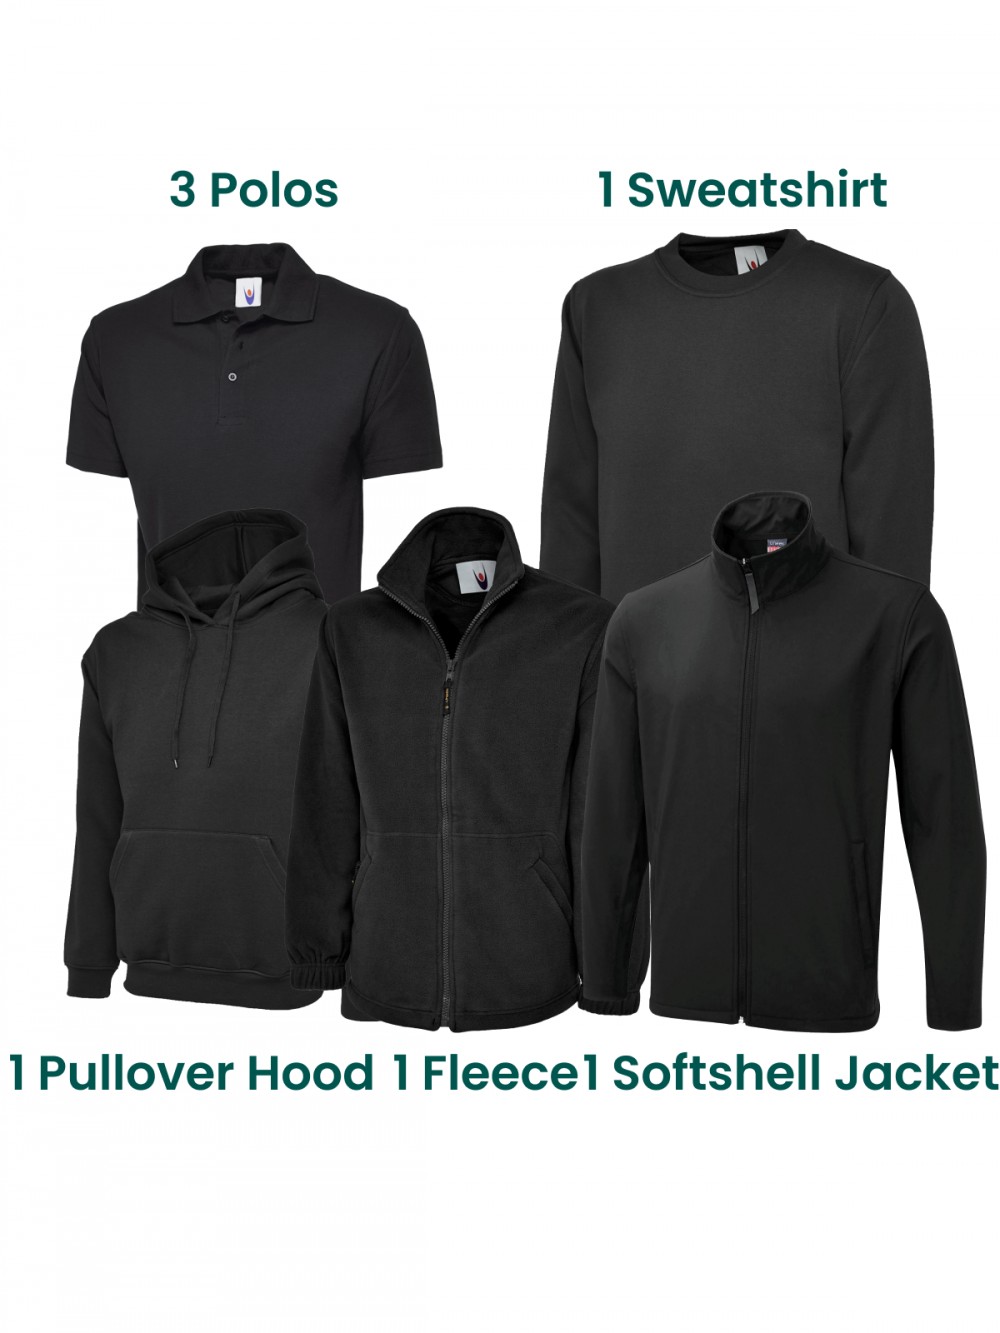 printed / embroidered workwear bundle - 3 polos 1 sweatshirt 1 fleece  1 pullover hood 1 softshell jkt